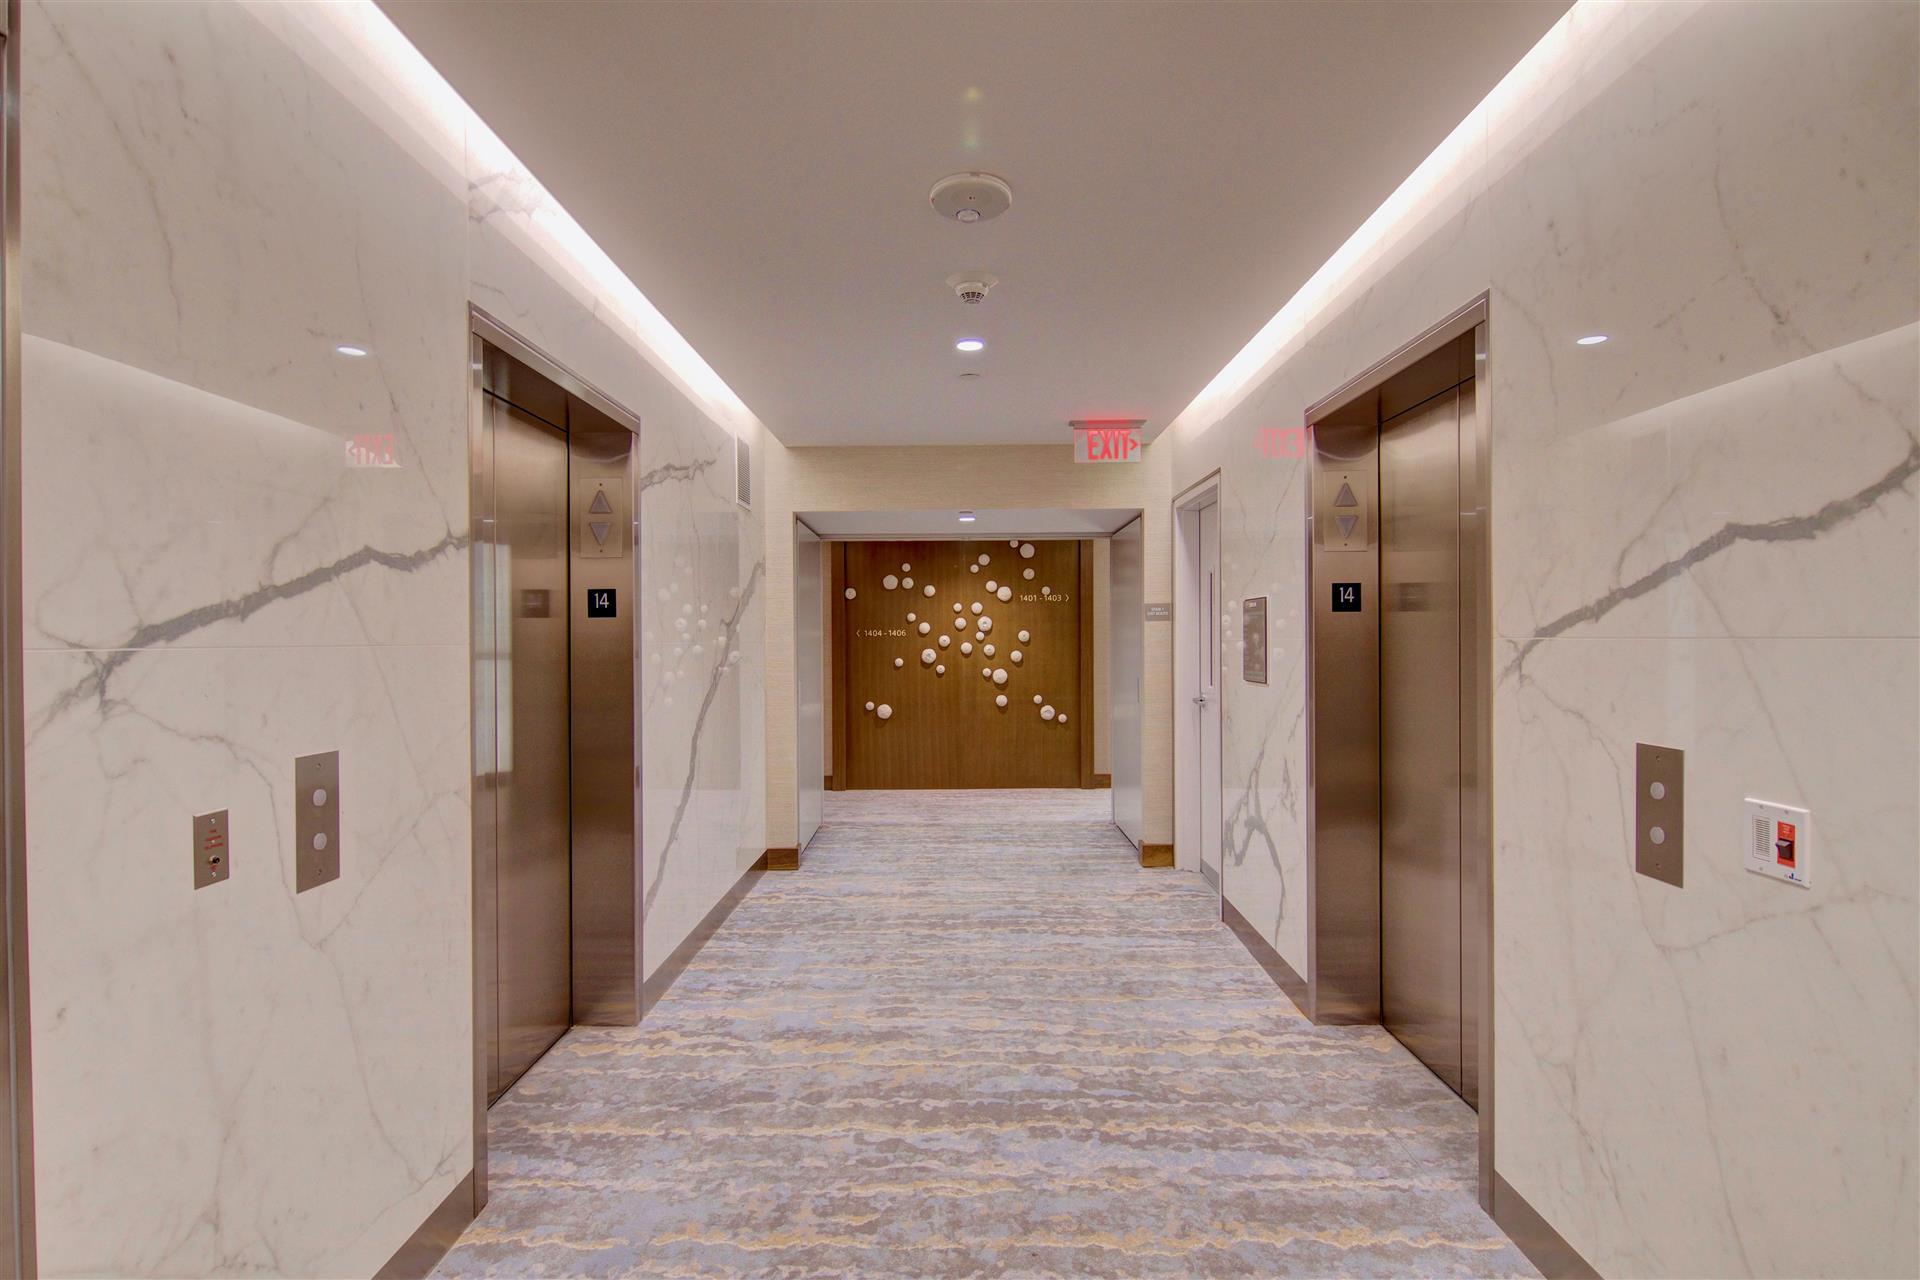 Elevator hallway leading to condominium residences